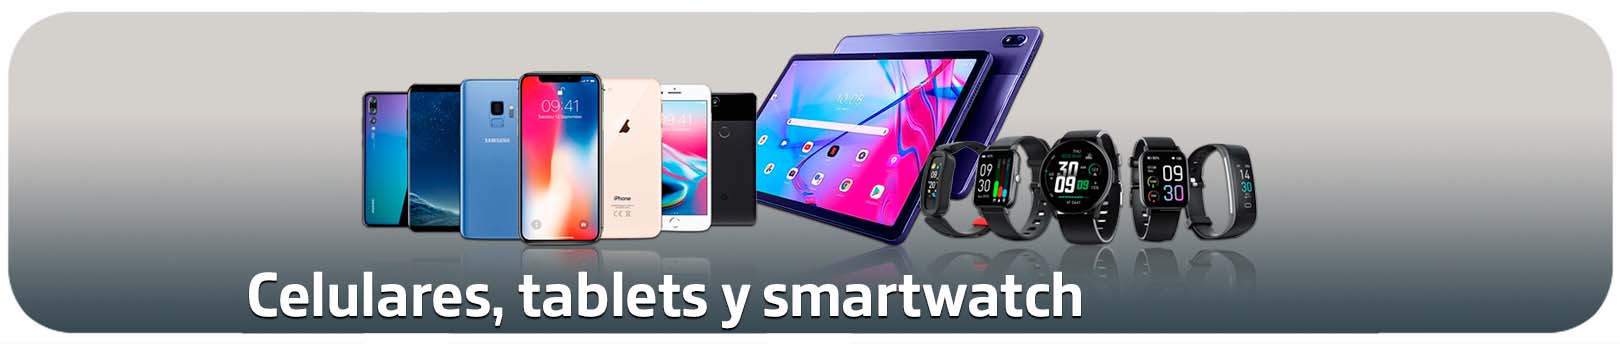 Celulares, tablets y smartwatch